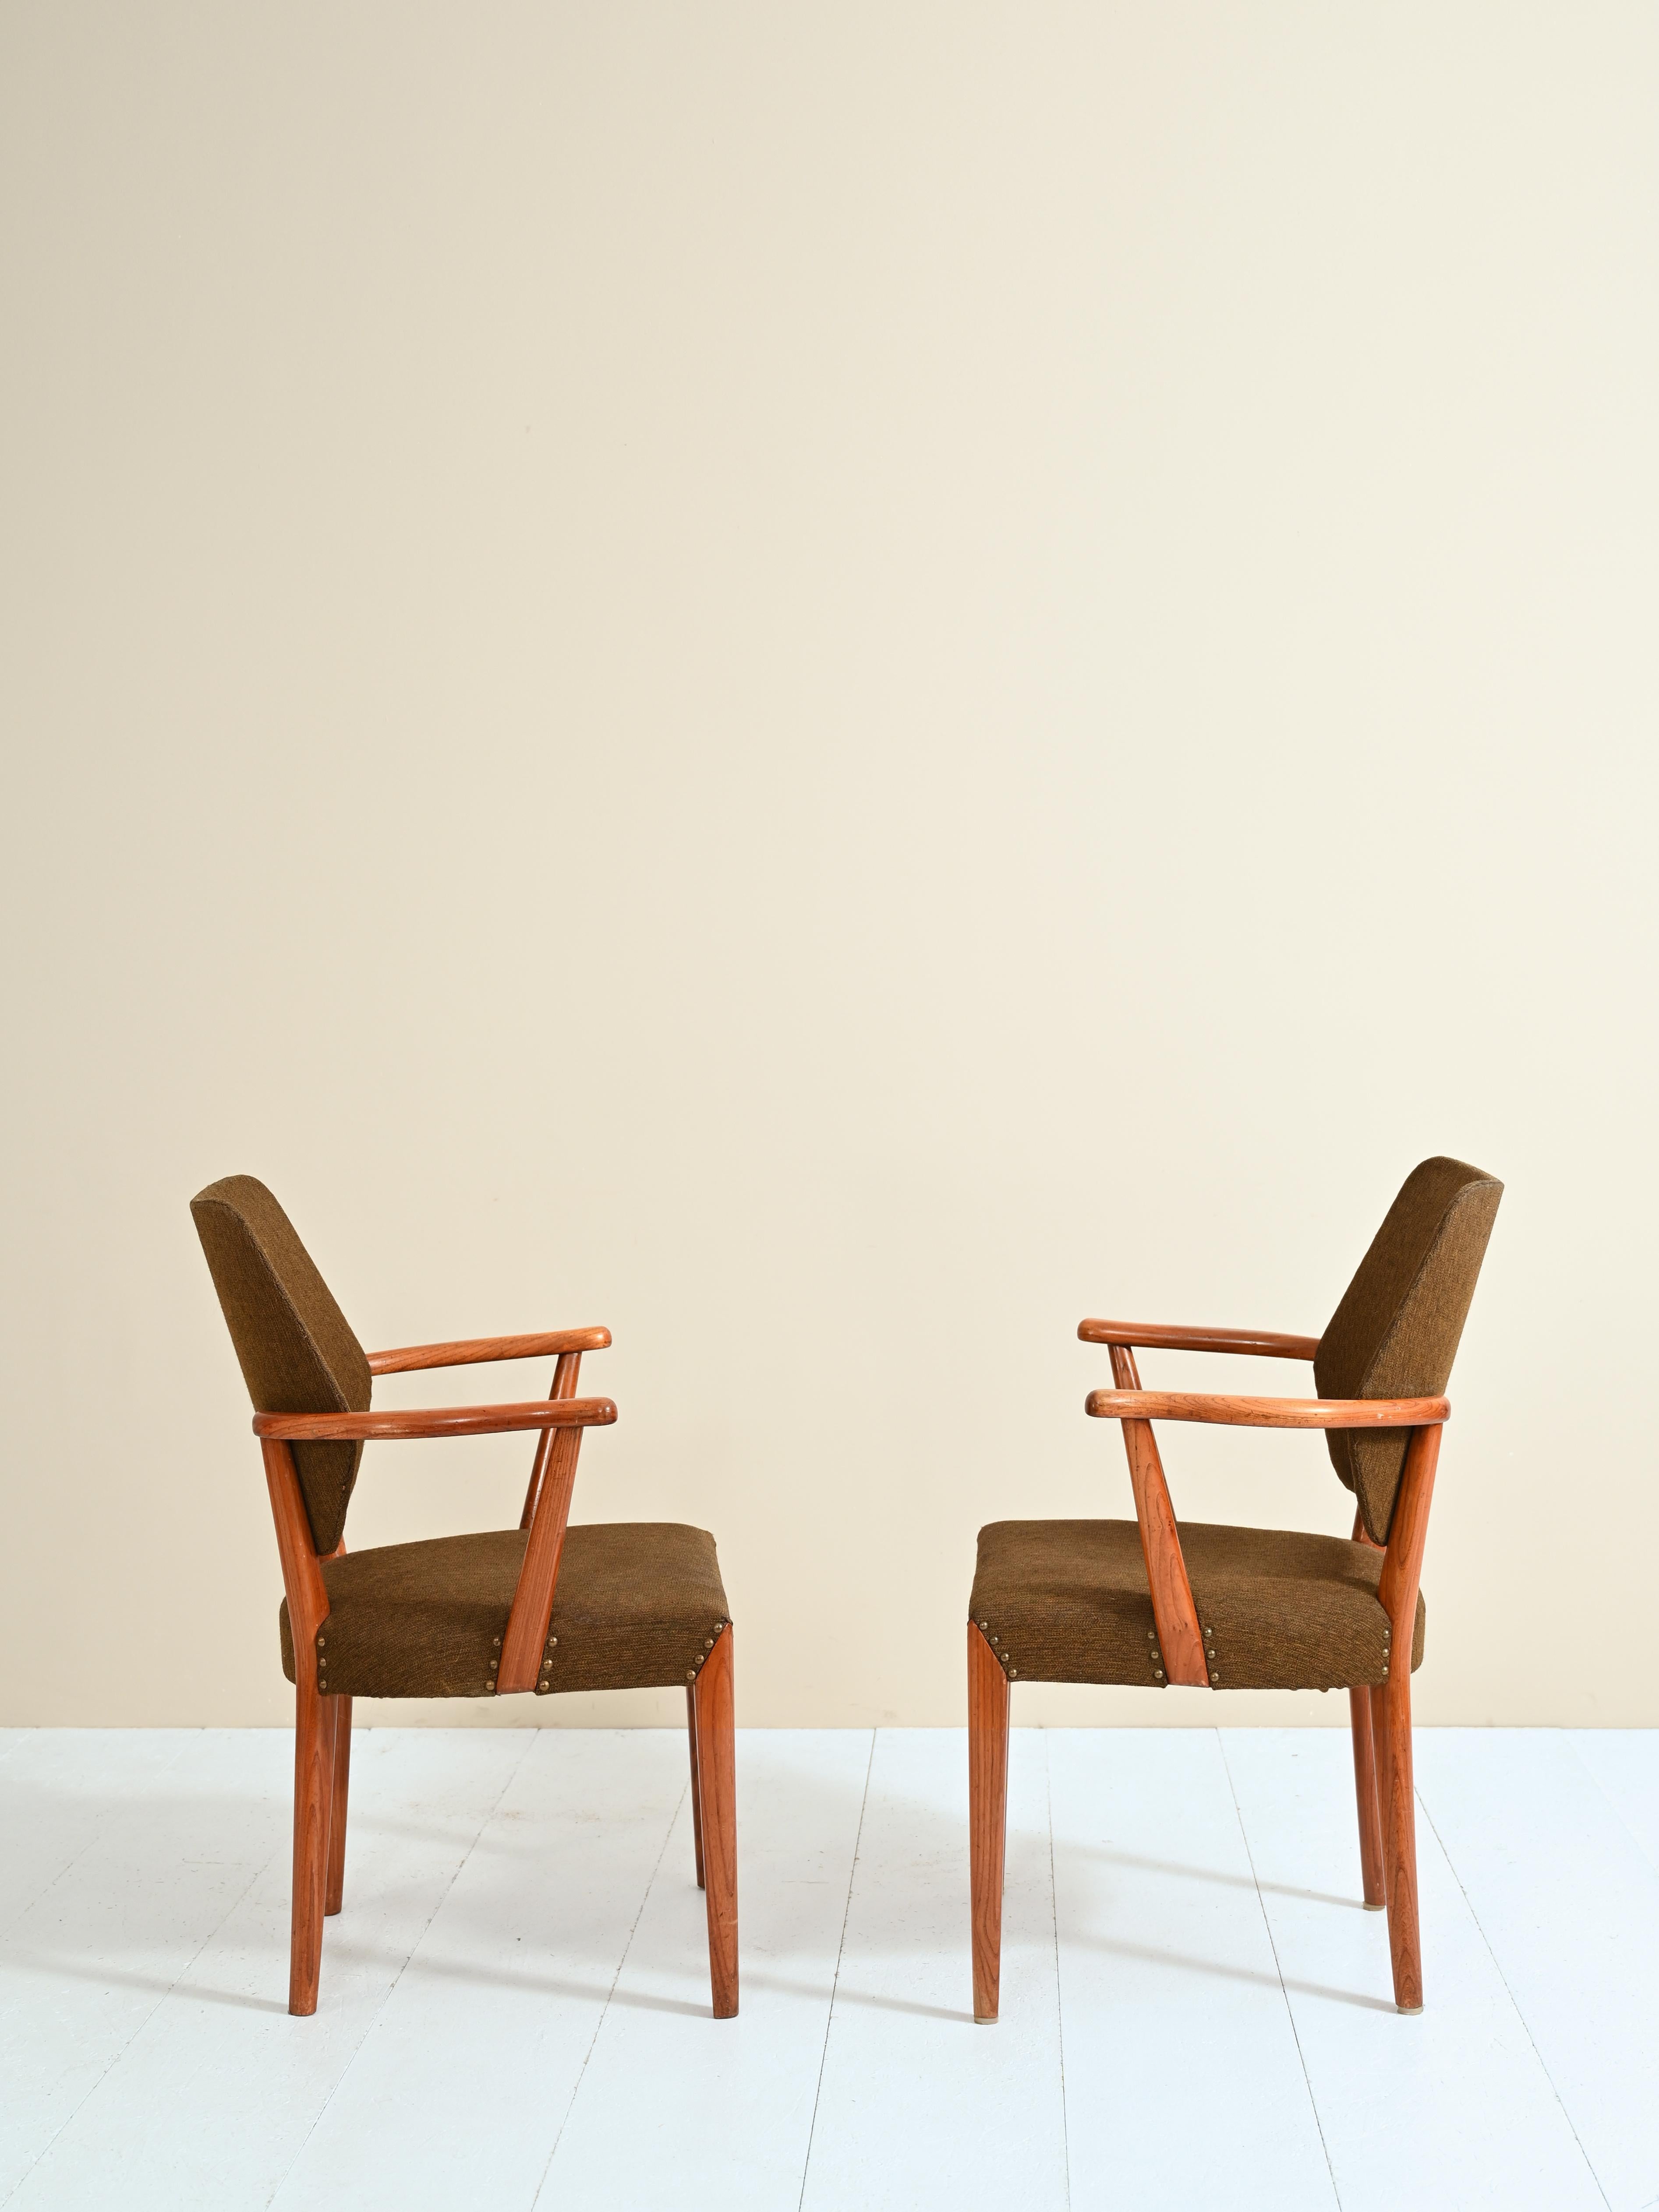 Scandinavian Modern Pair of Scandinavian Chairs from the 1950s For Sale